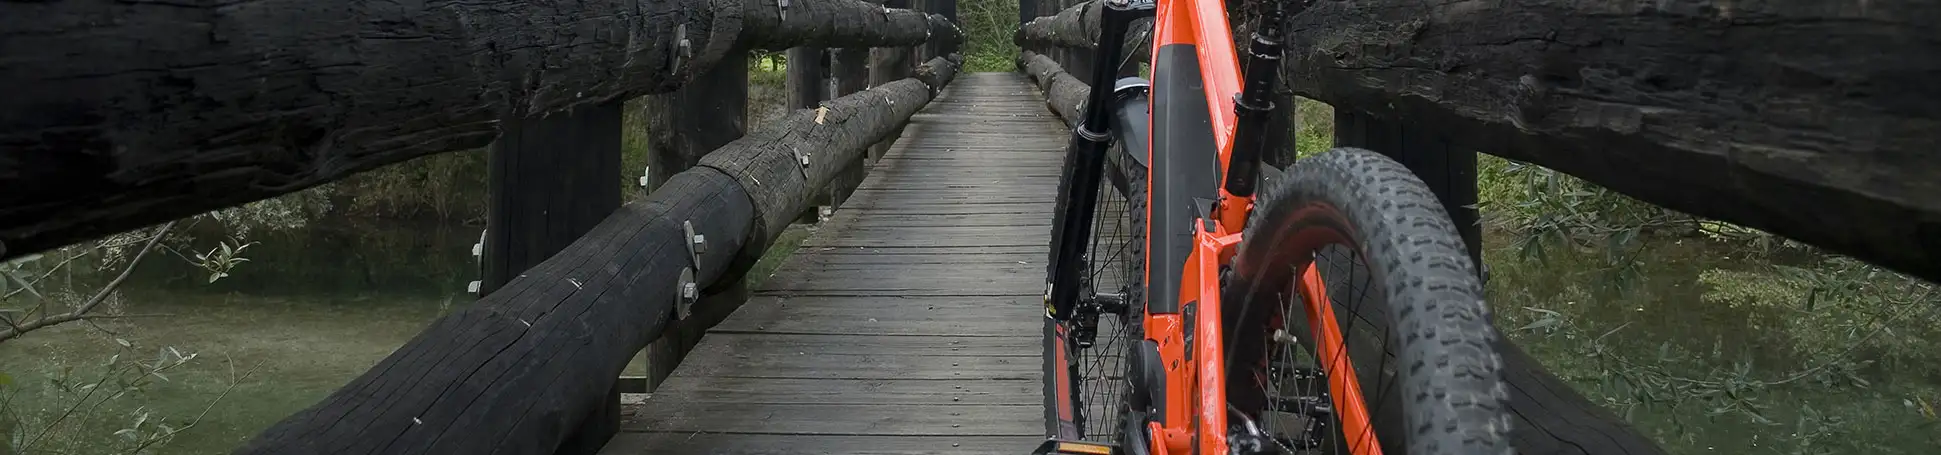 E-Bike im Wald